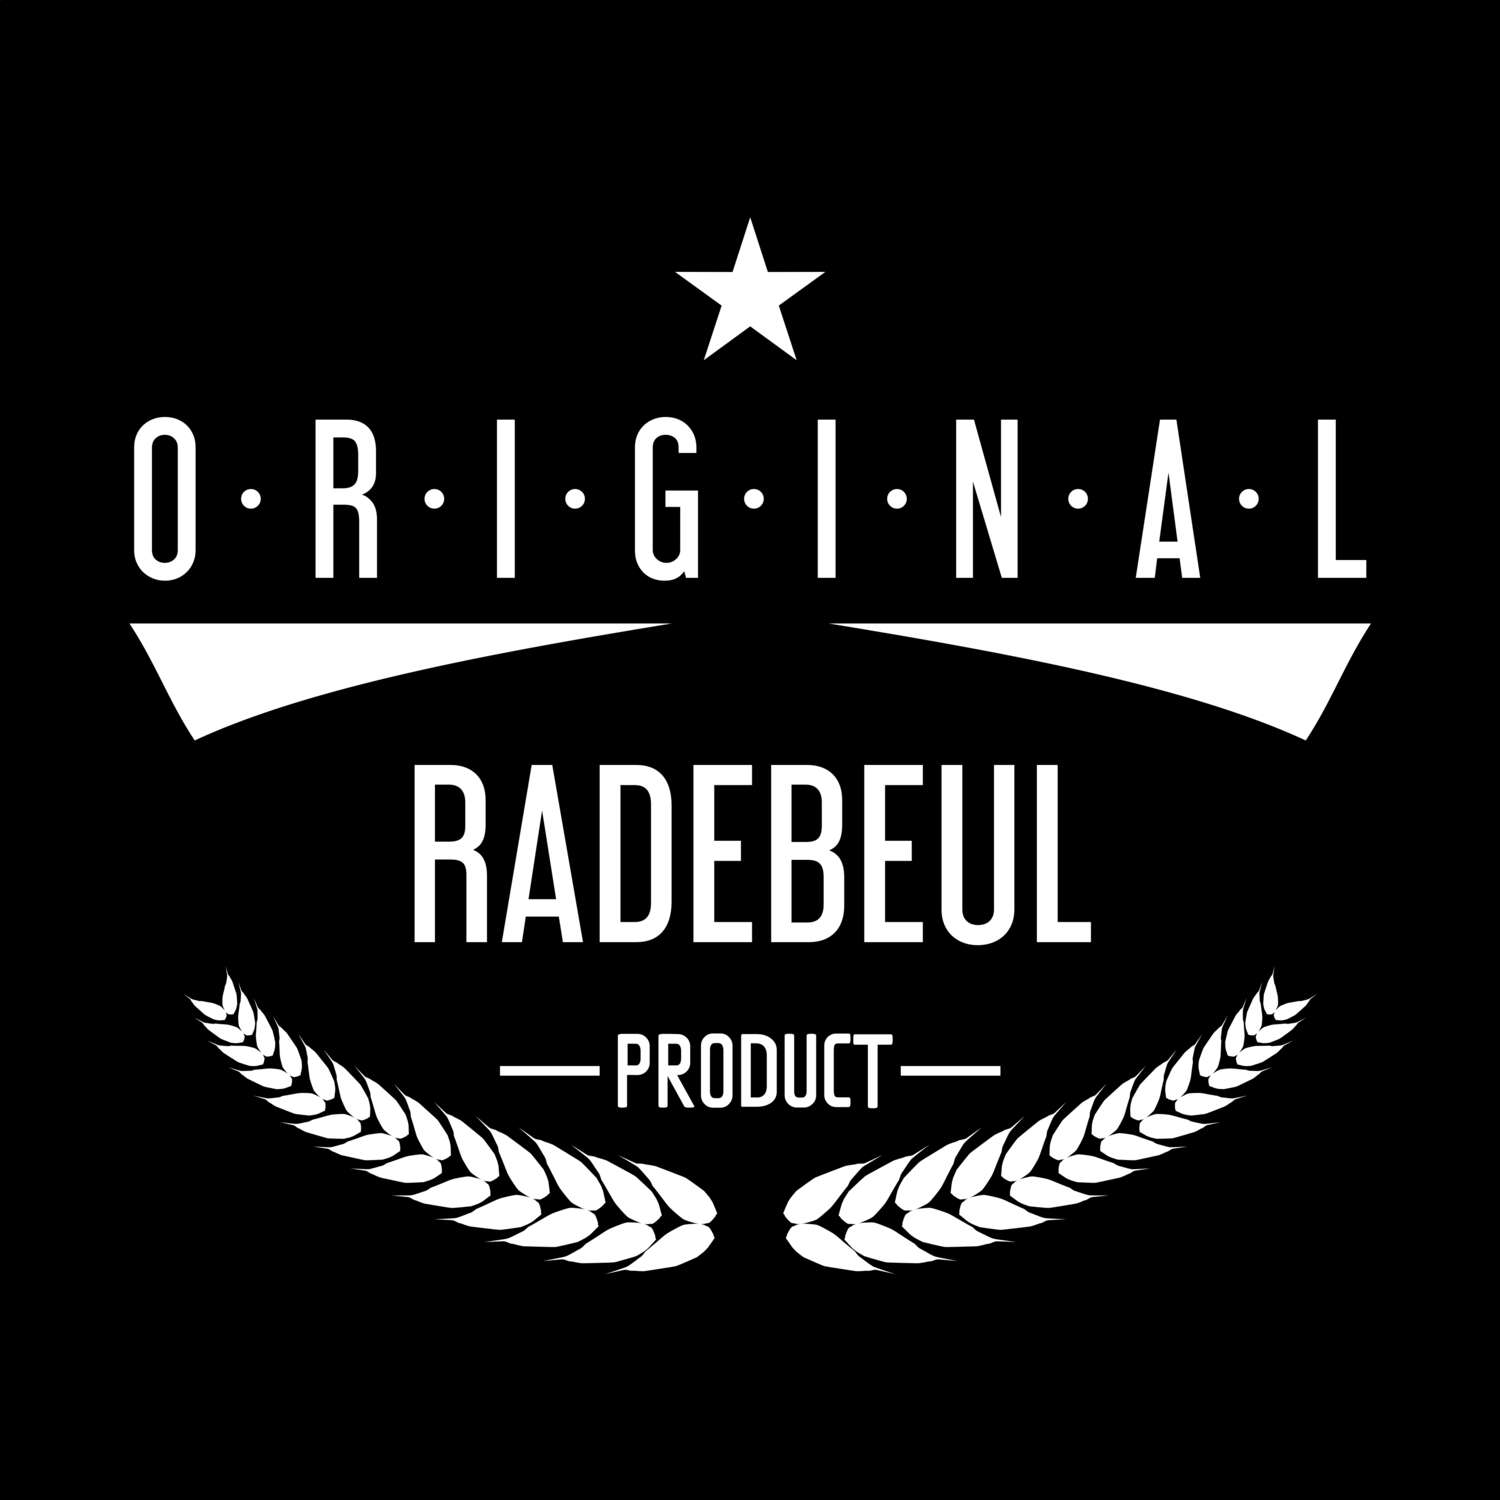 Radebeul T-Shirt »Original Product«